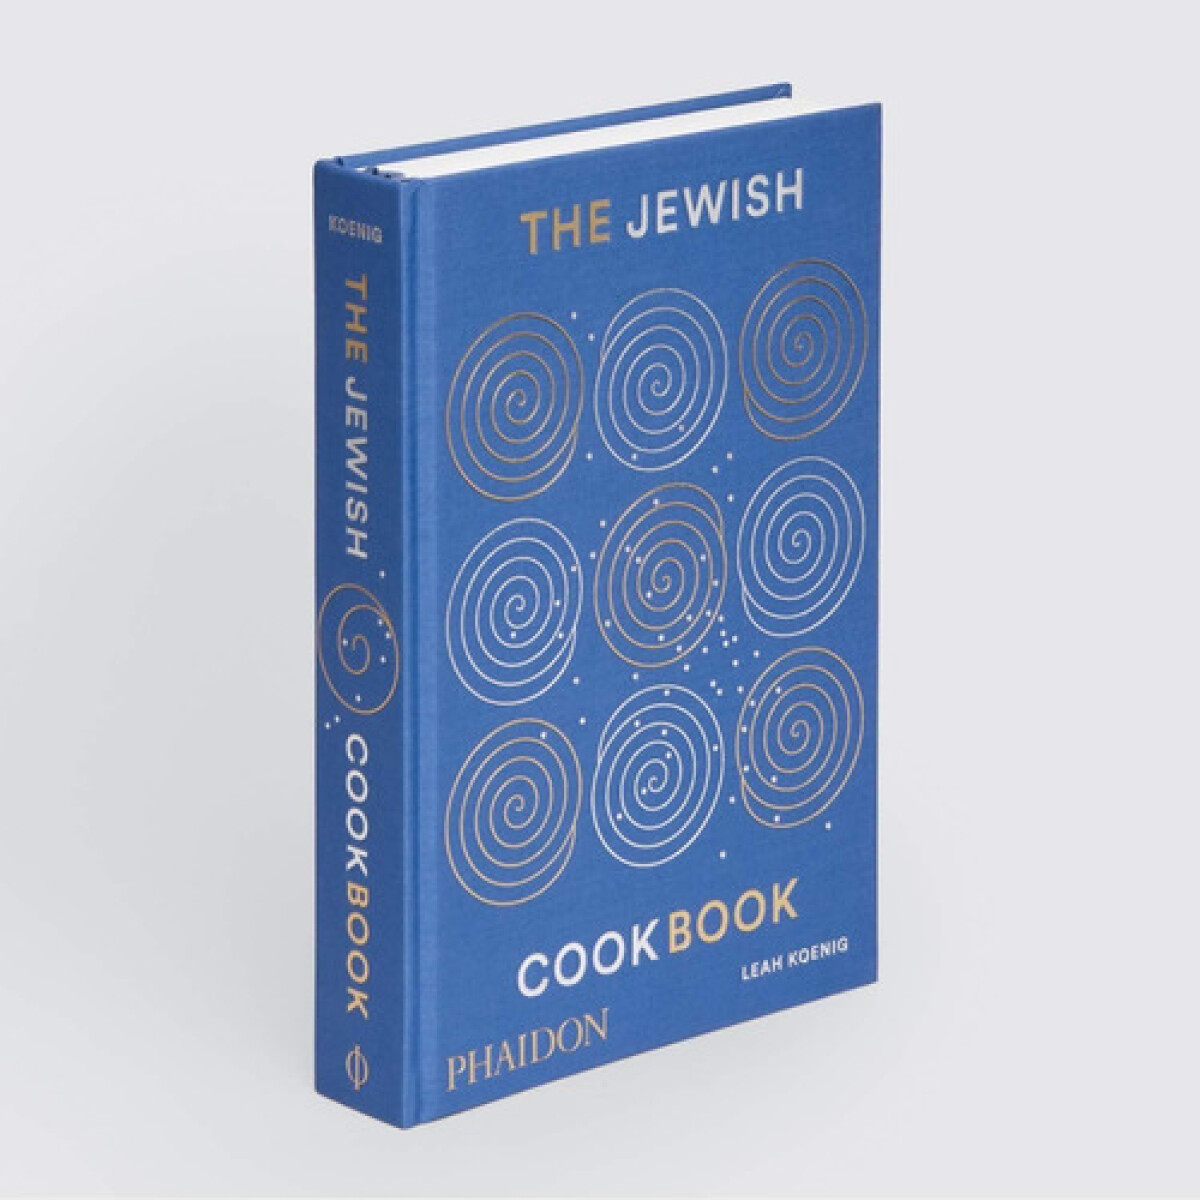 THE JEWISH COOKBOOK - LEAH KOENIG 